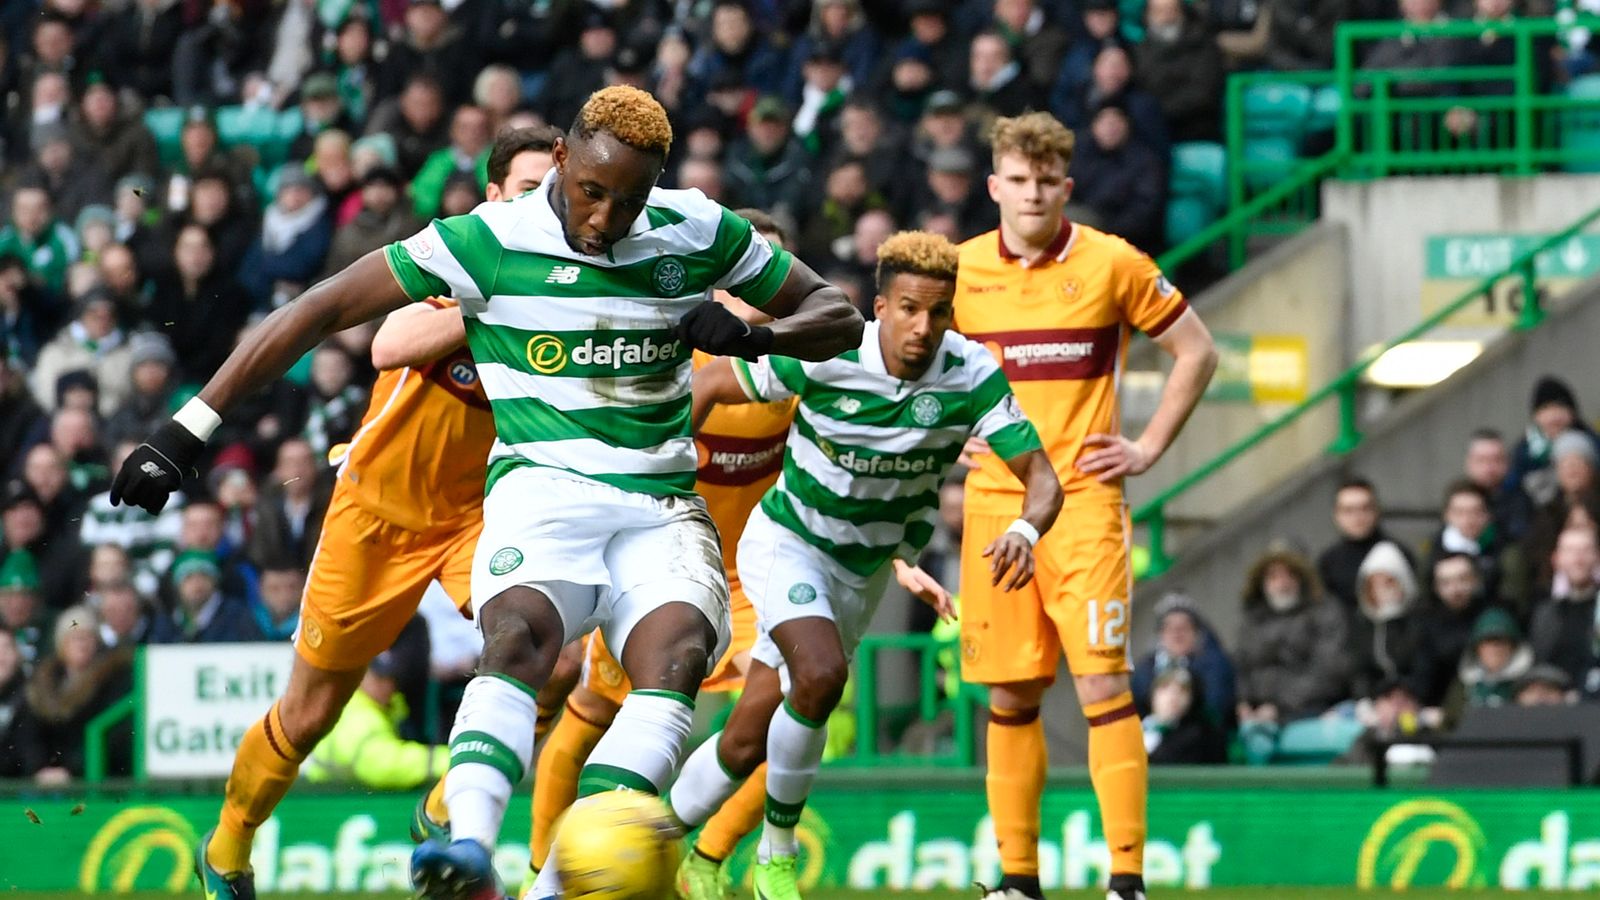 Celtic 2 - 0 Motherwell - Match Report & Highlights